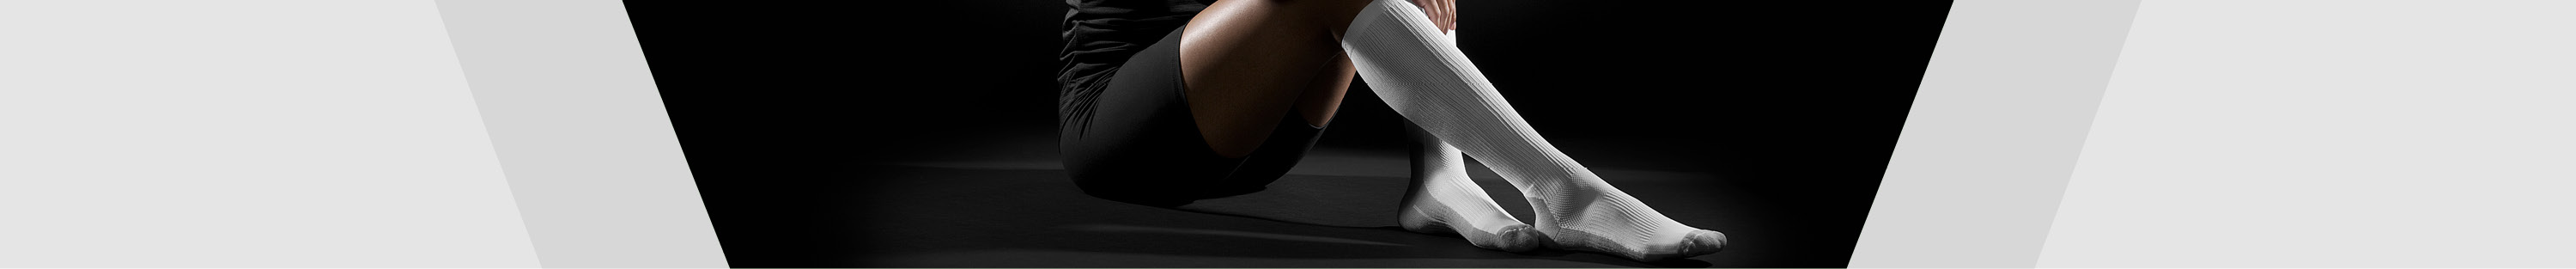 leg-feet-discomfort-sports-solutions-category-banners5.jpg